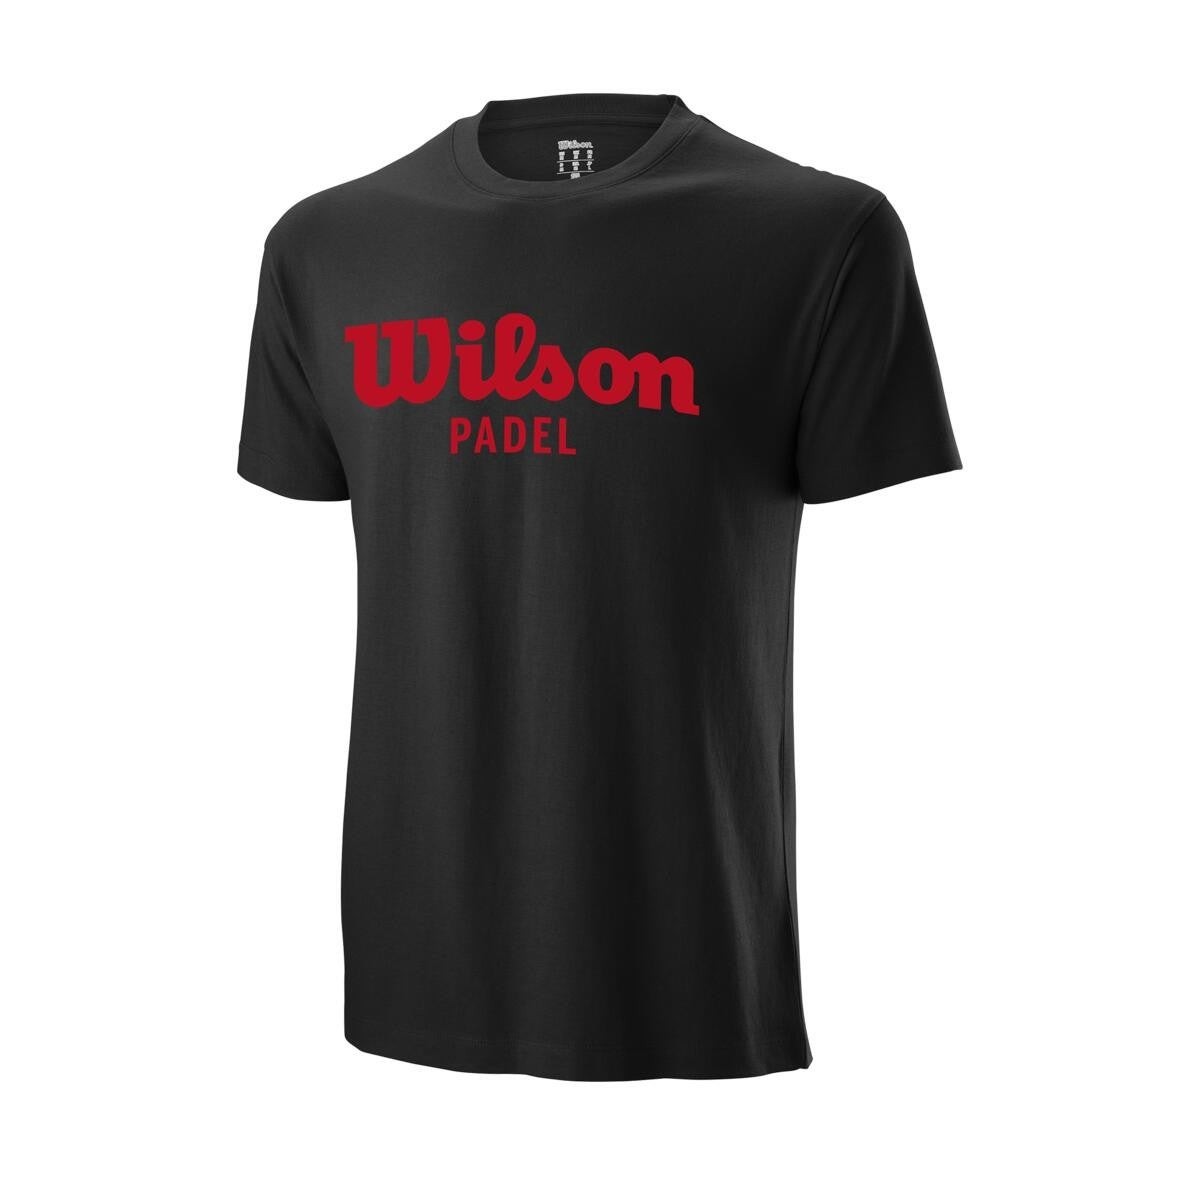 Wilson Padel Script Cotton T-shirt - Black